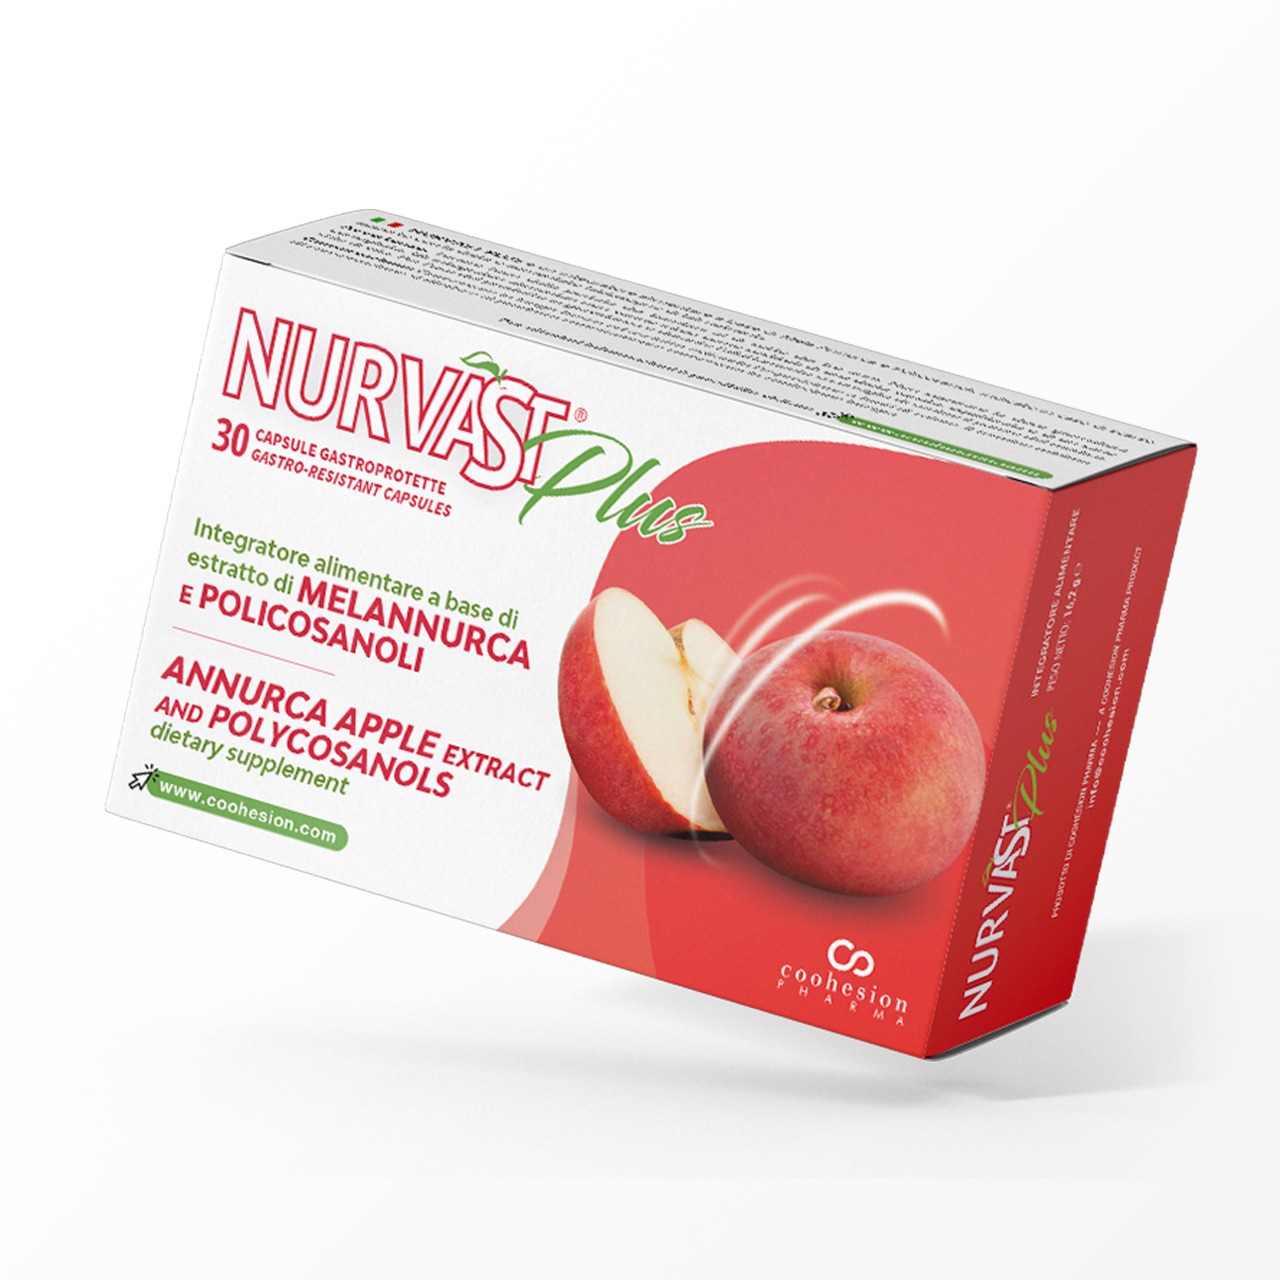 Nurvast Plus - Dietary supplement based on Annurca apple extract and policosanols